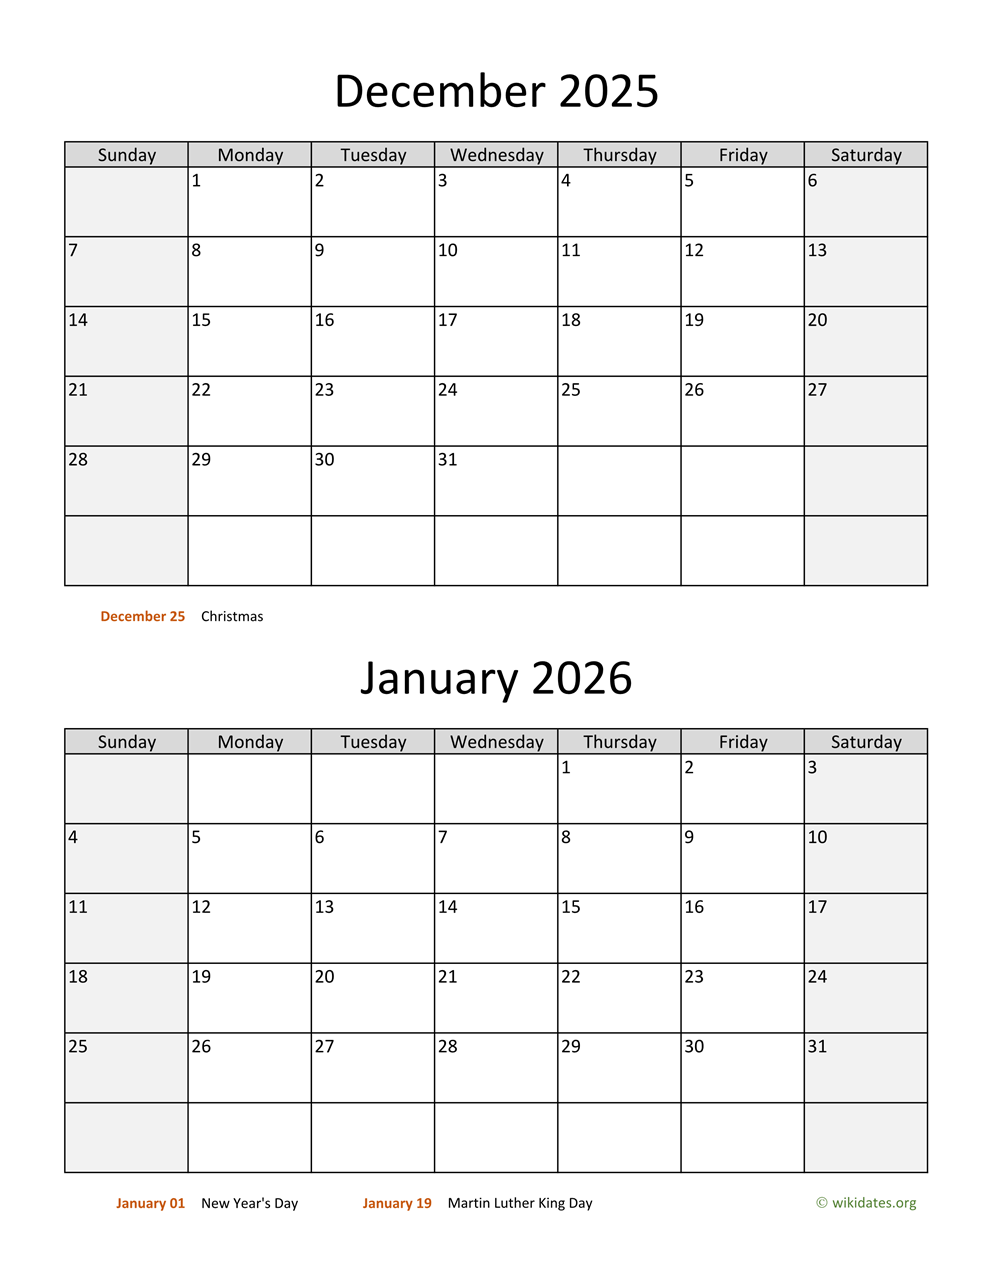 December 2025 And January 2026 Calendar WikiDates